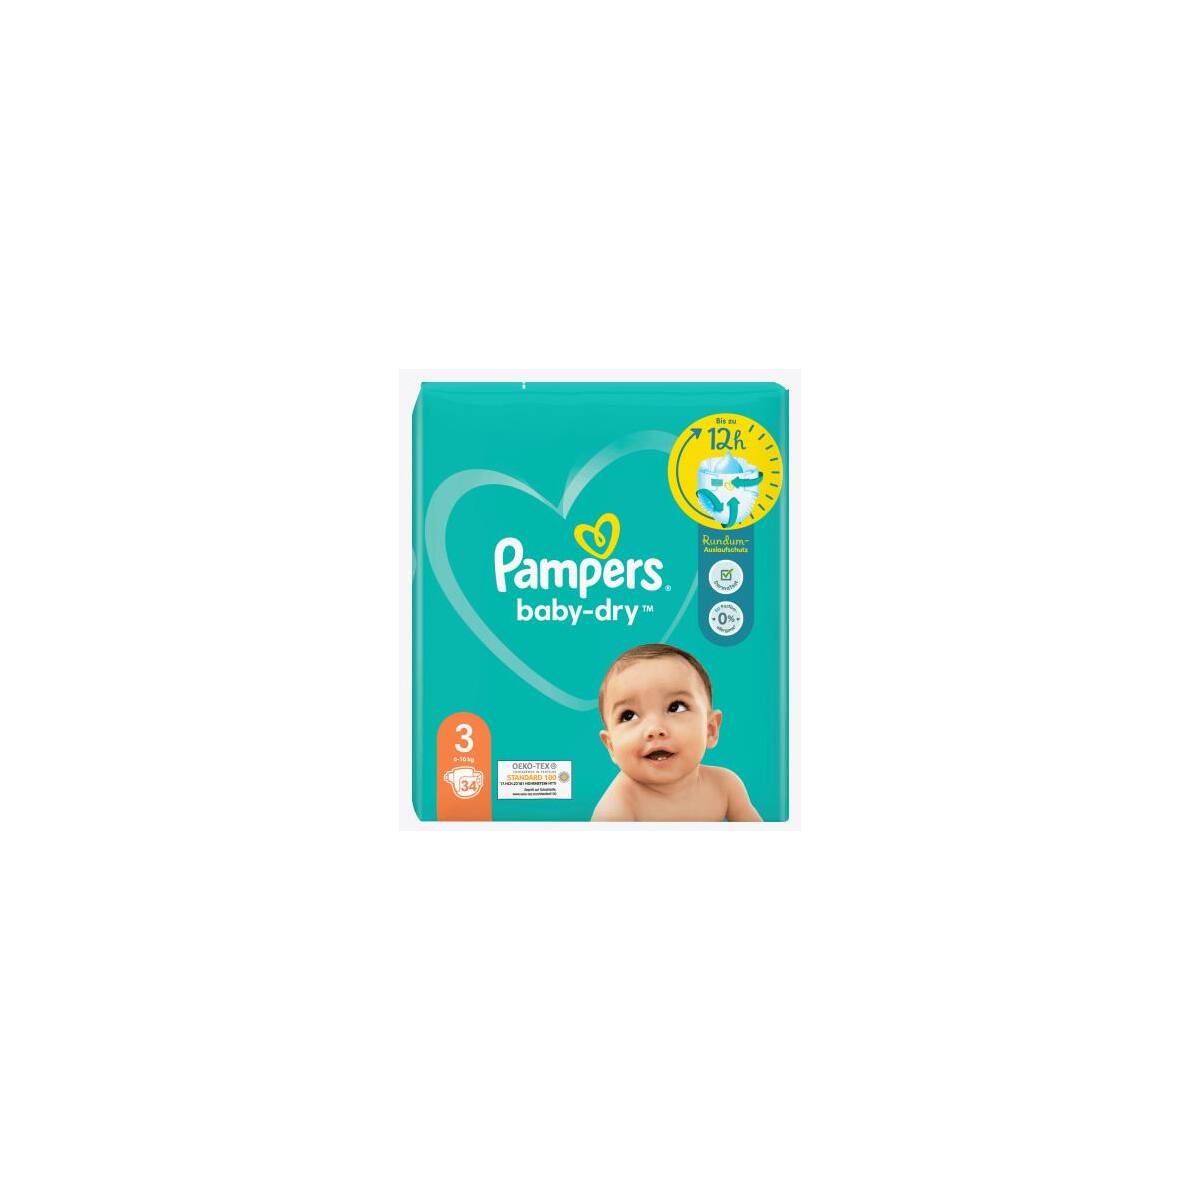 Pampers Baby Dry Windeln Größe 3, 11,63 €